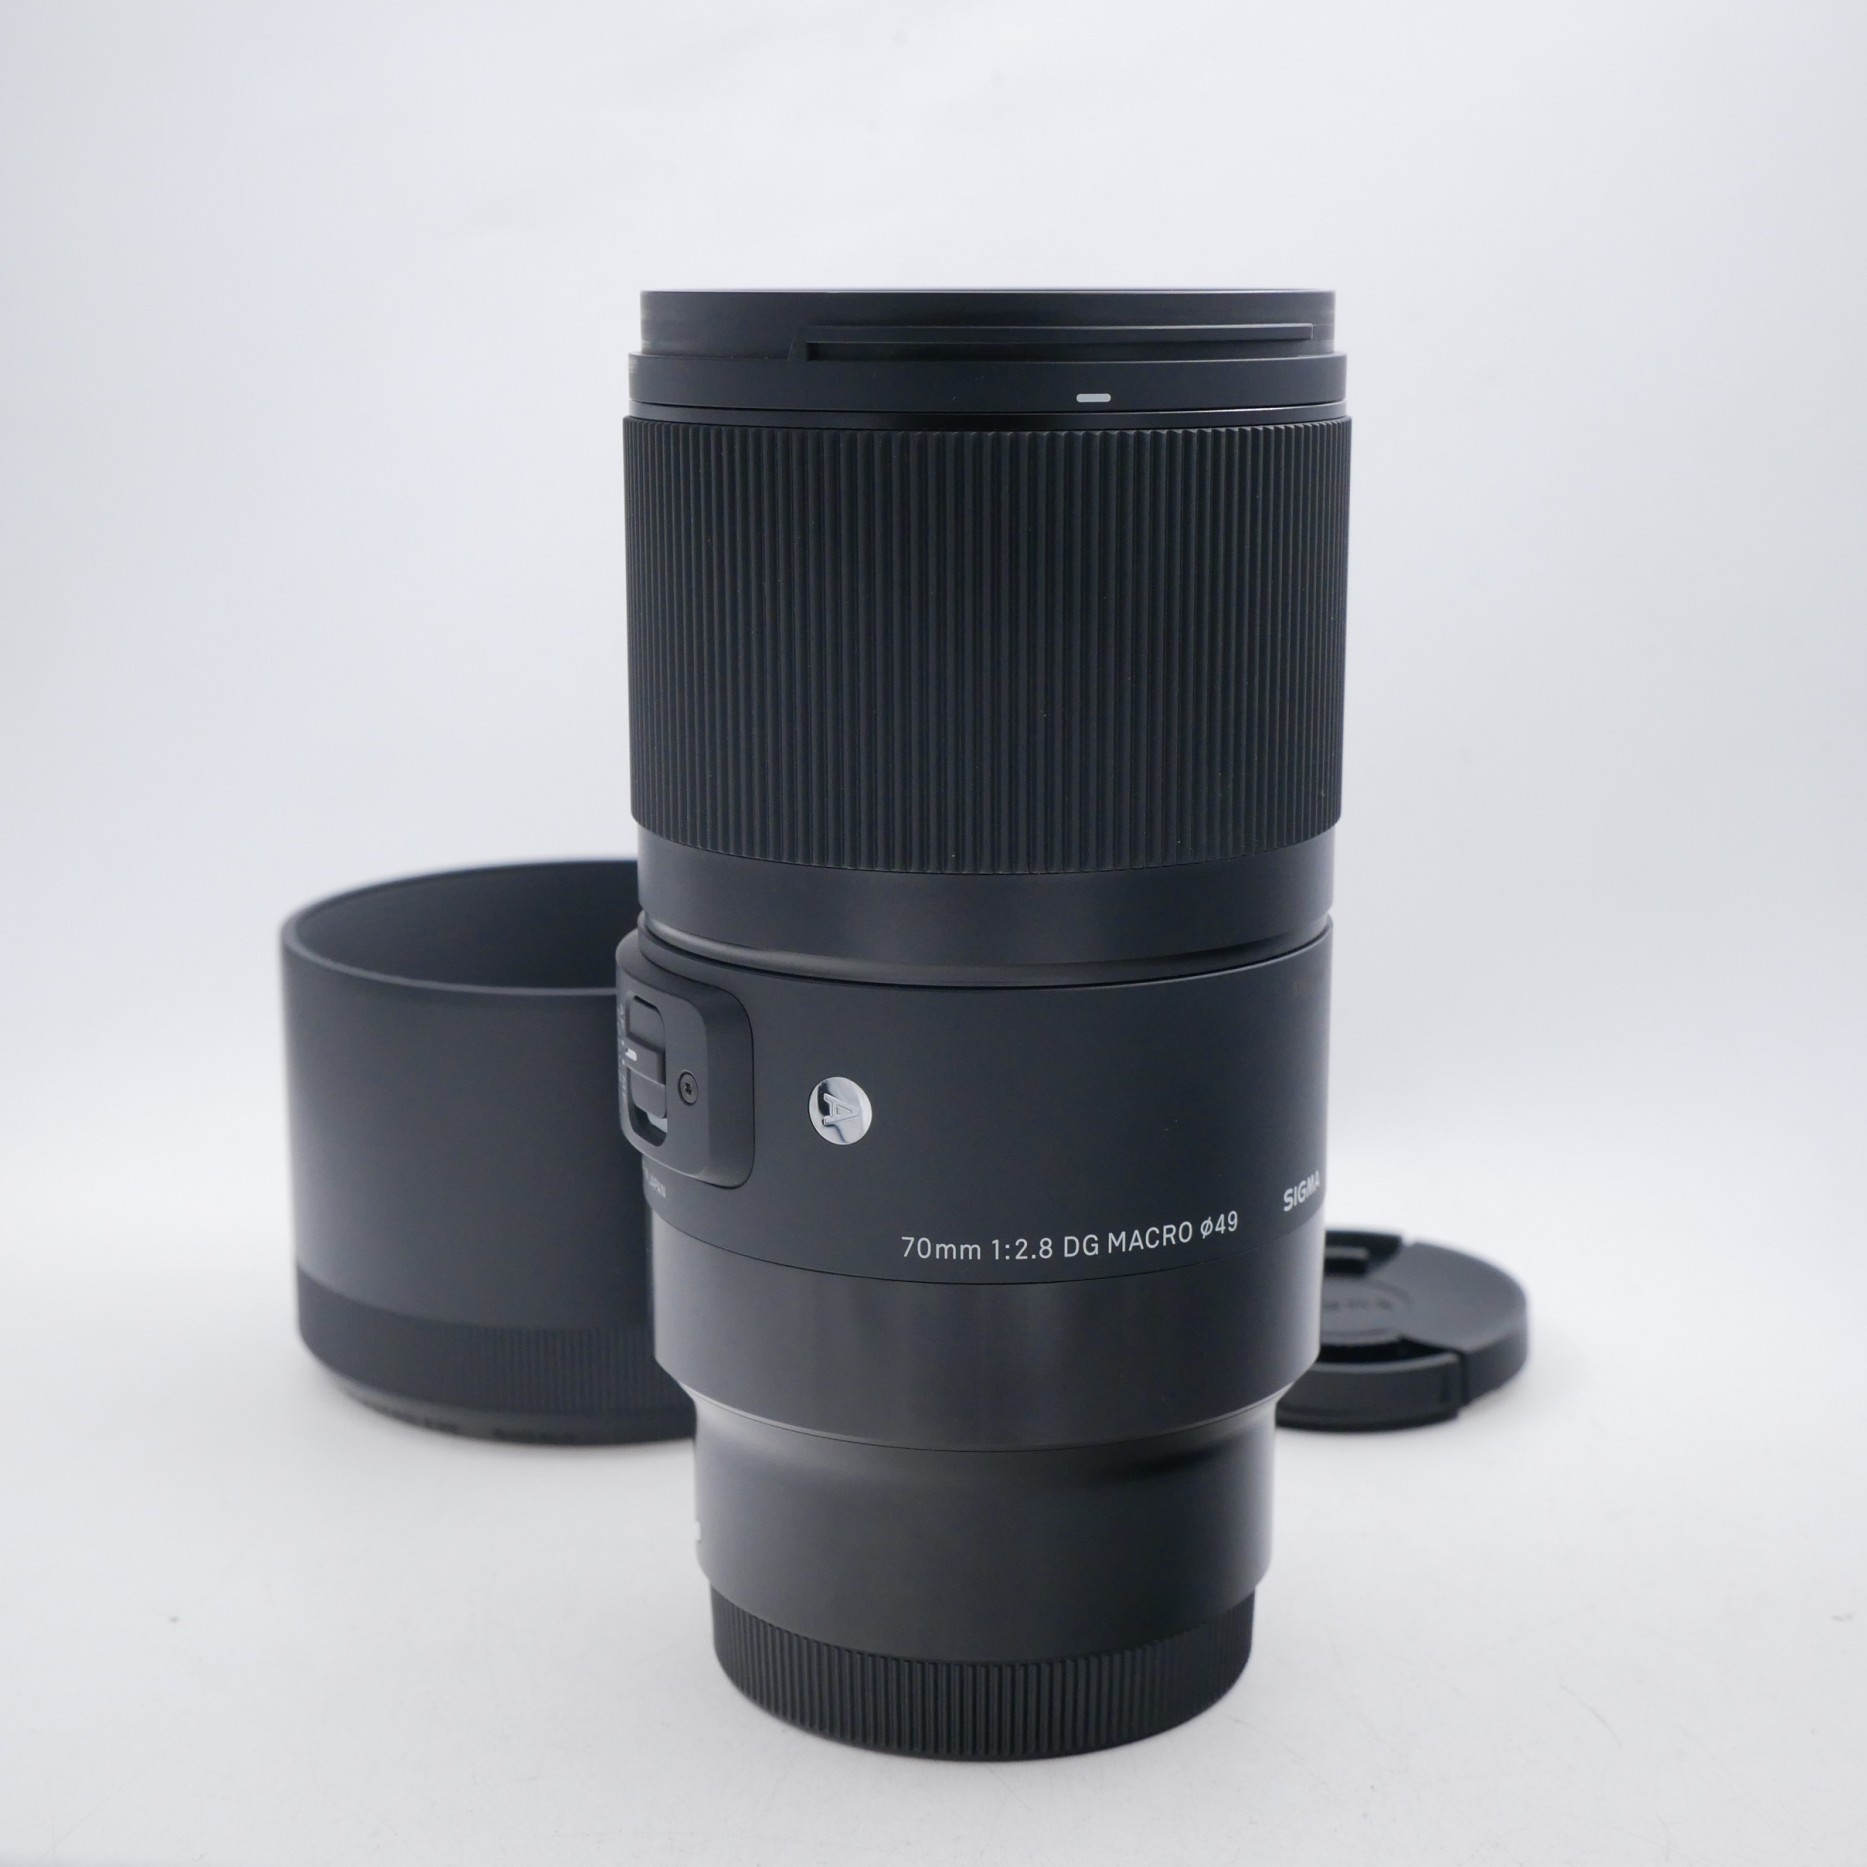 Sigma AF 70mm F/2.8 DG Art Macro Lens in Sony FE Mount